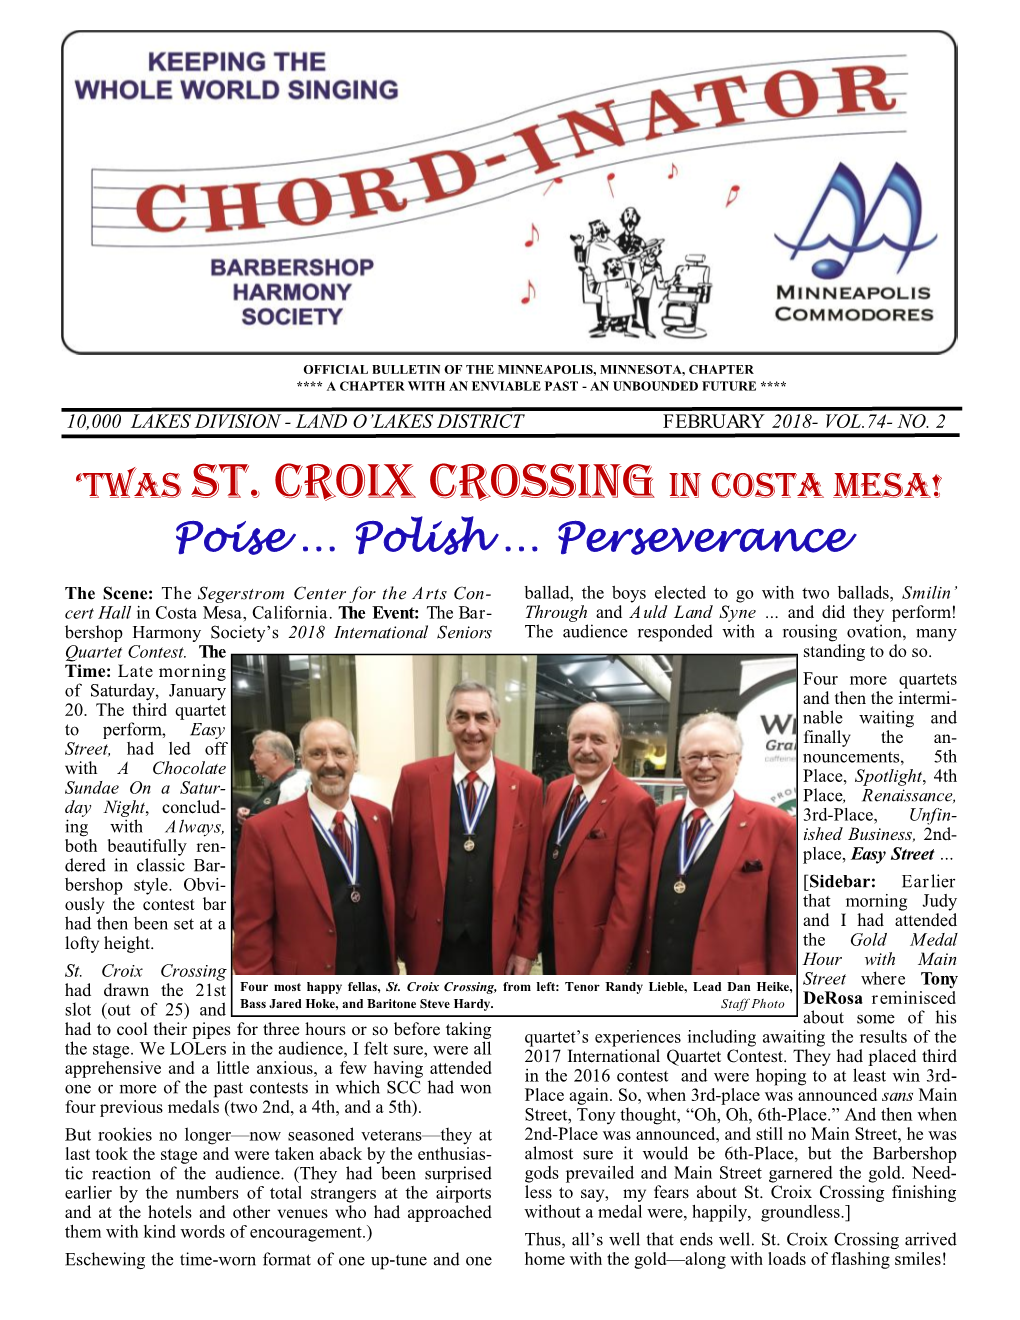 'Twas St. Croix Crossing in Costa Mesa!